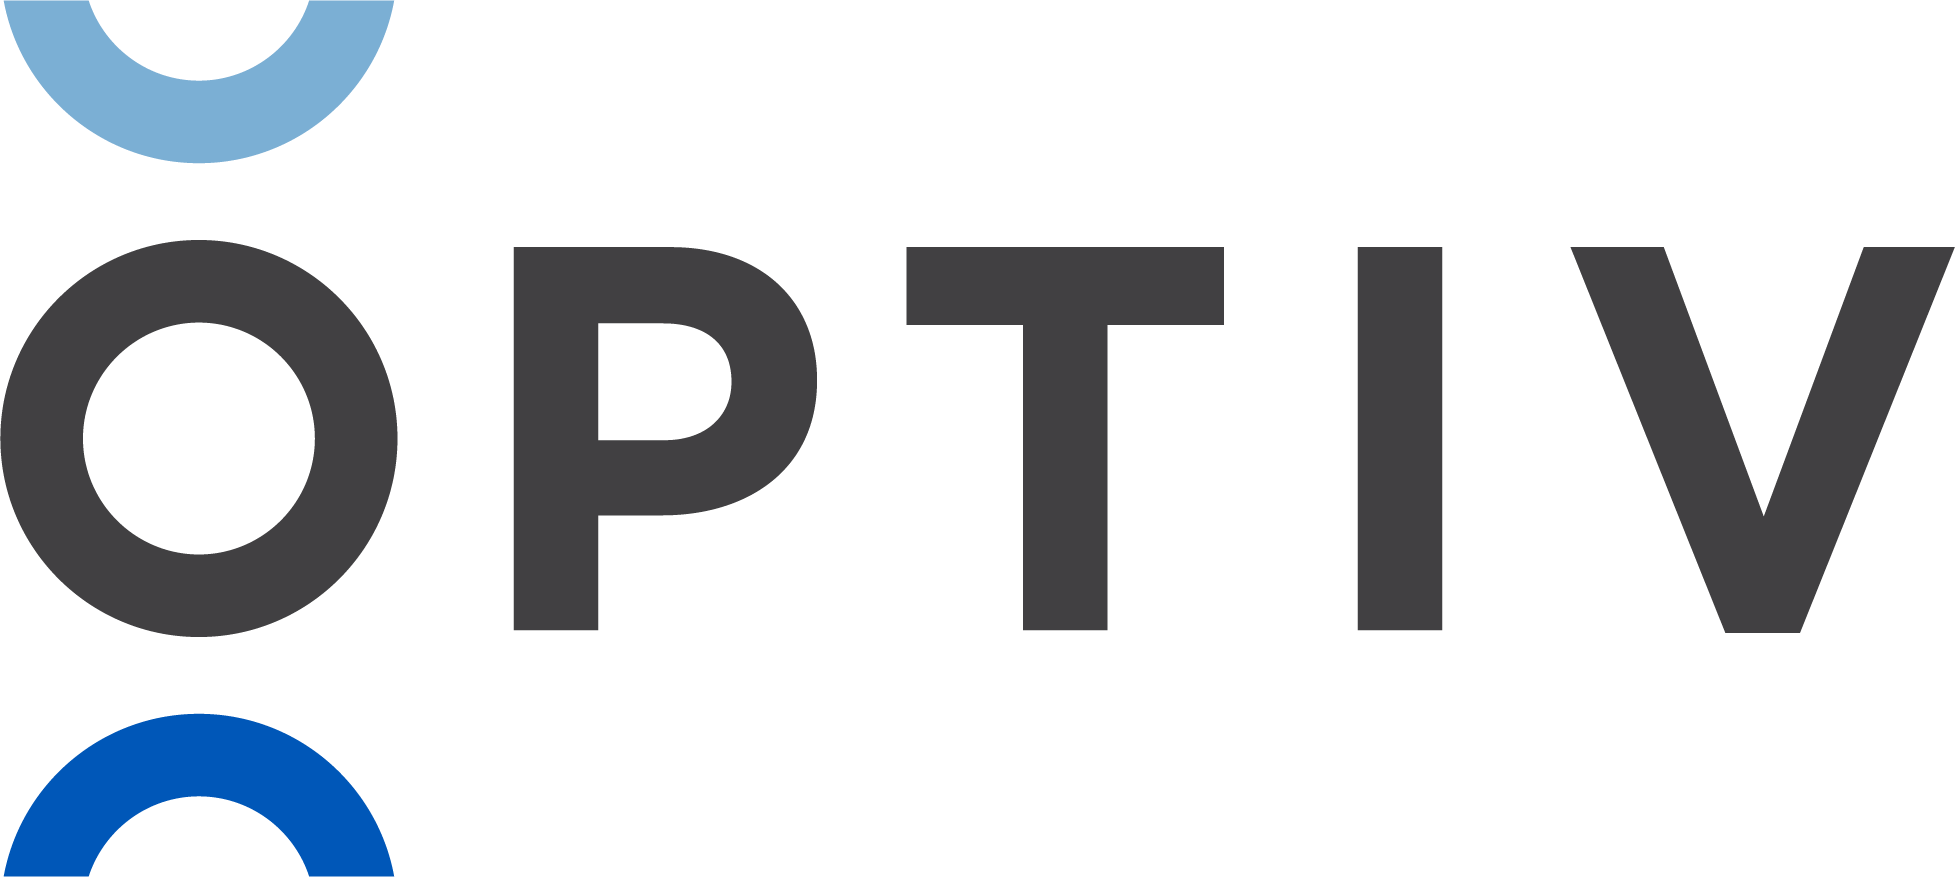 Optiv Security Inc. - Partner Logo